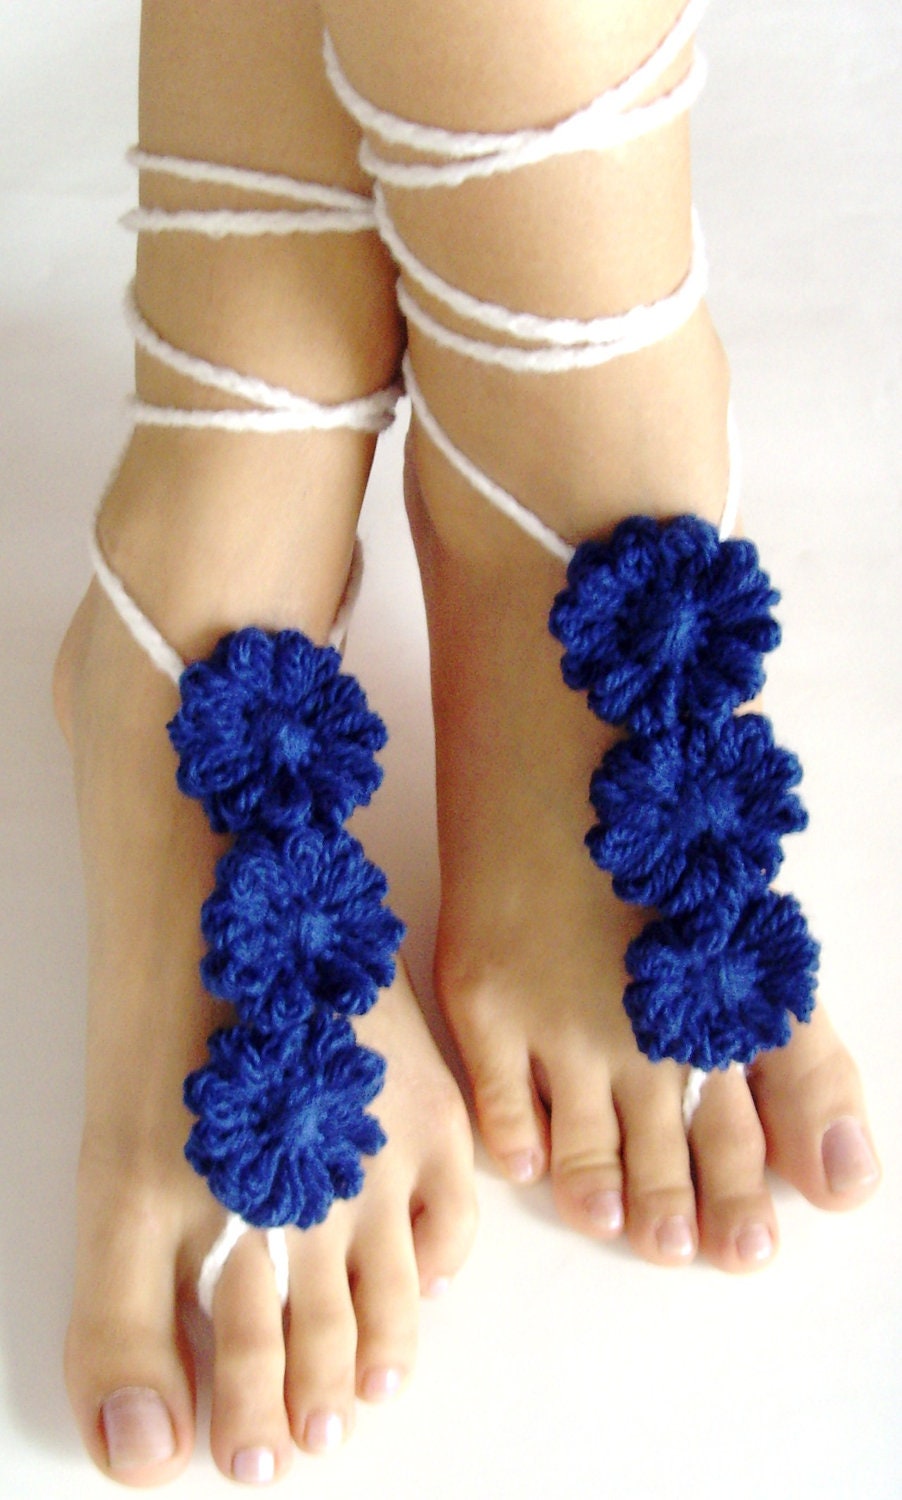 BAREFOOT SANDALS Crochet Blue Flowers Chic Nude Summer by Slavenna